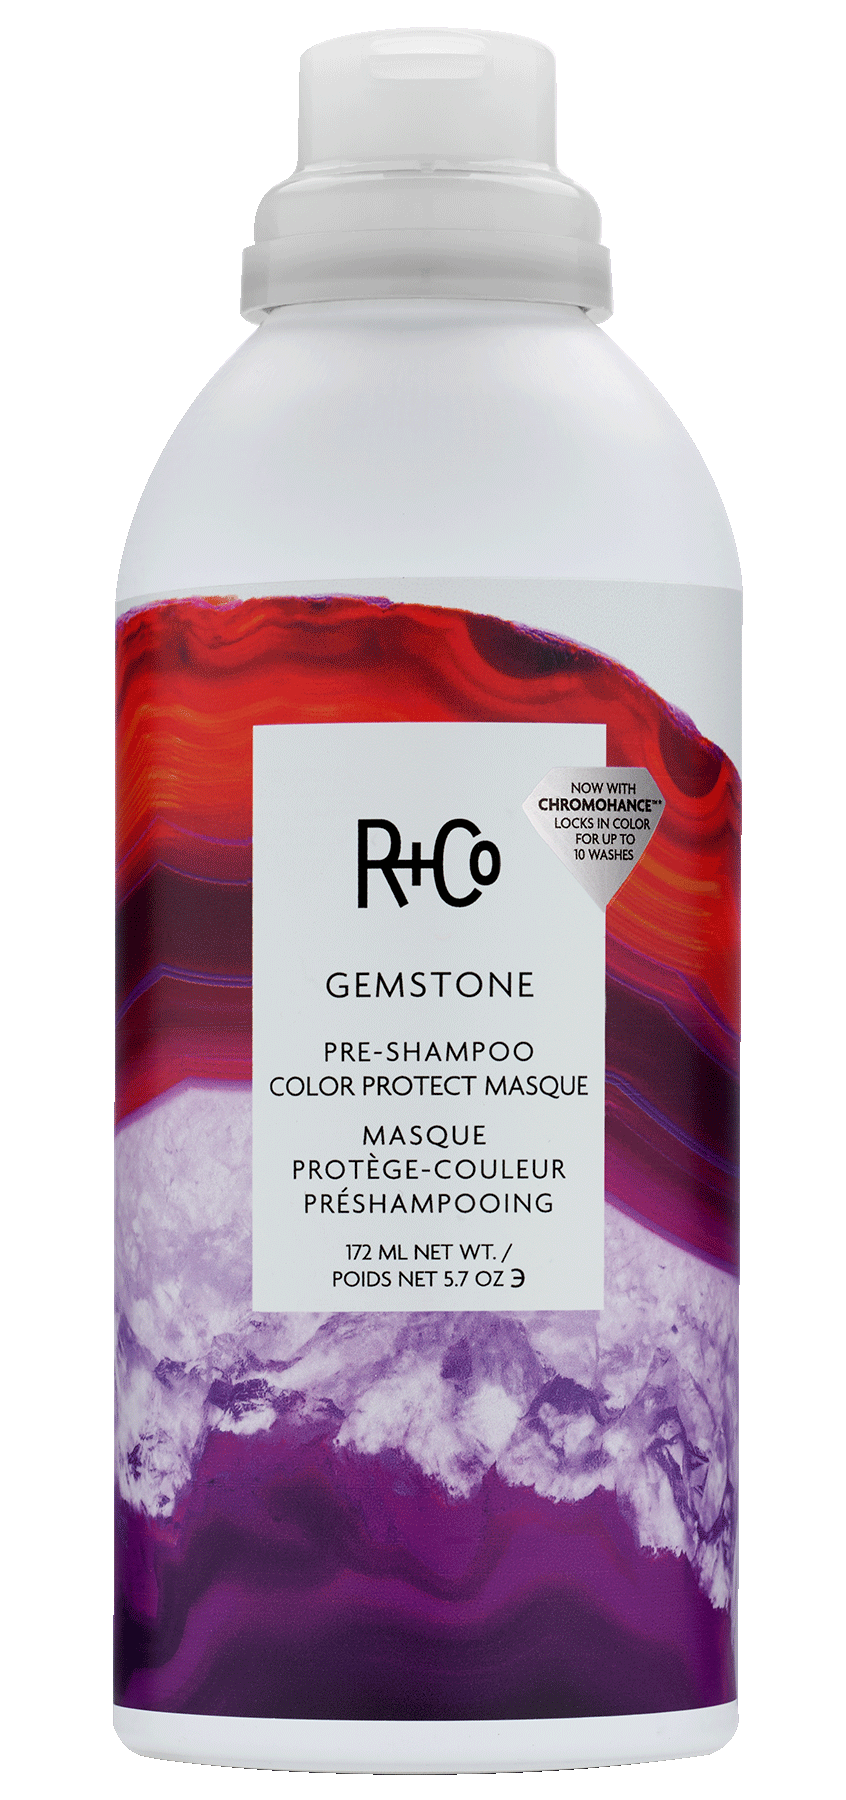 R+CO-Gemstone Pre-Shampoo Color Protect Masque 172ml